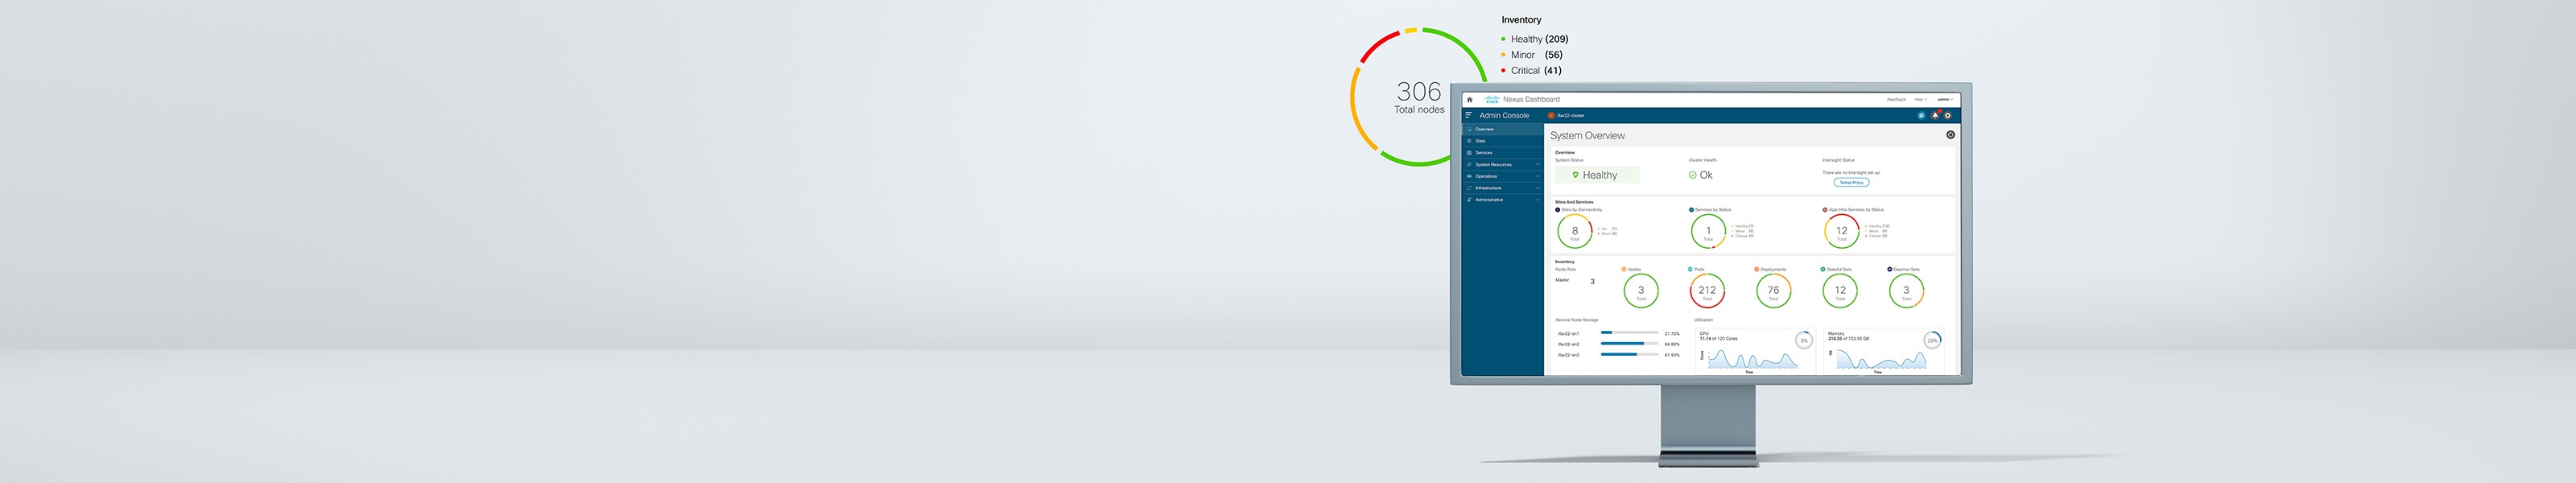 Cisco Nexus Dashboard displaying system overview